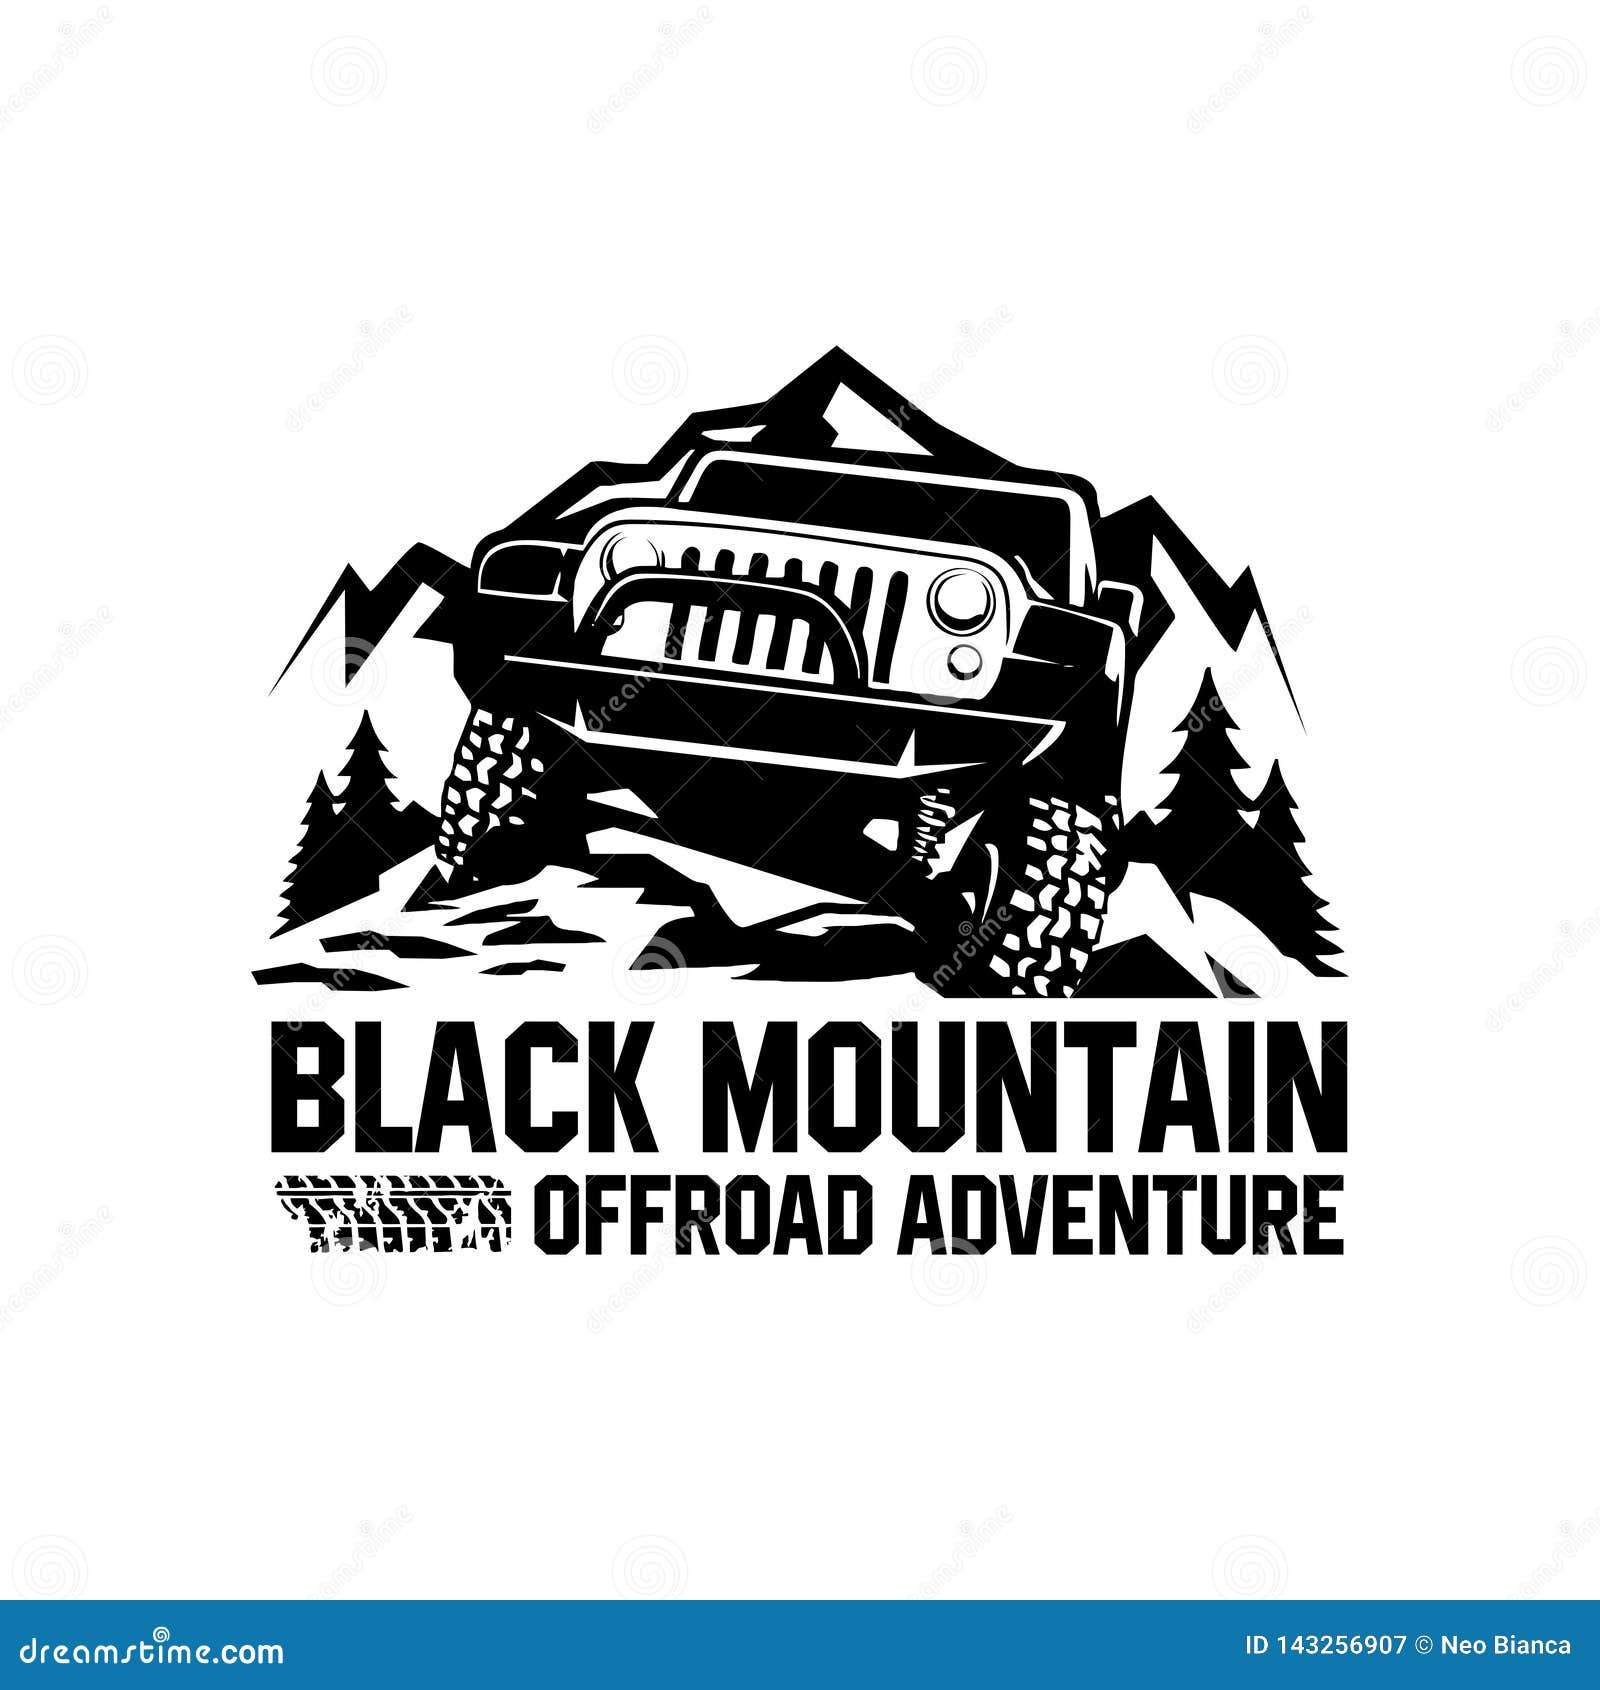 black mountain offroad adventure logo 